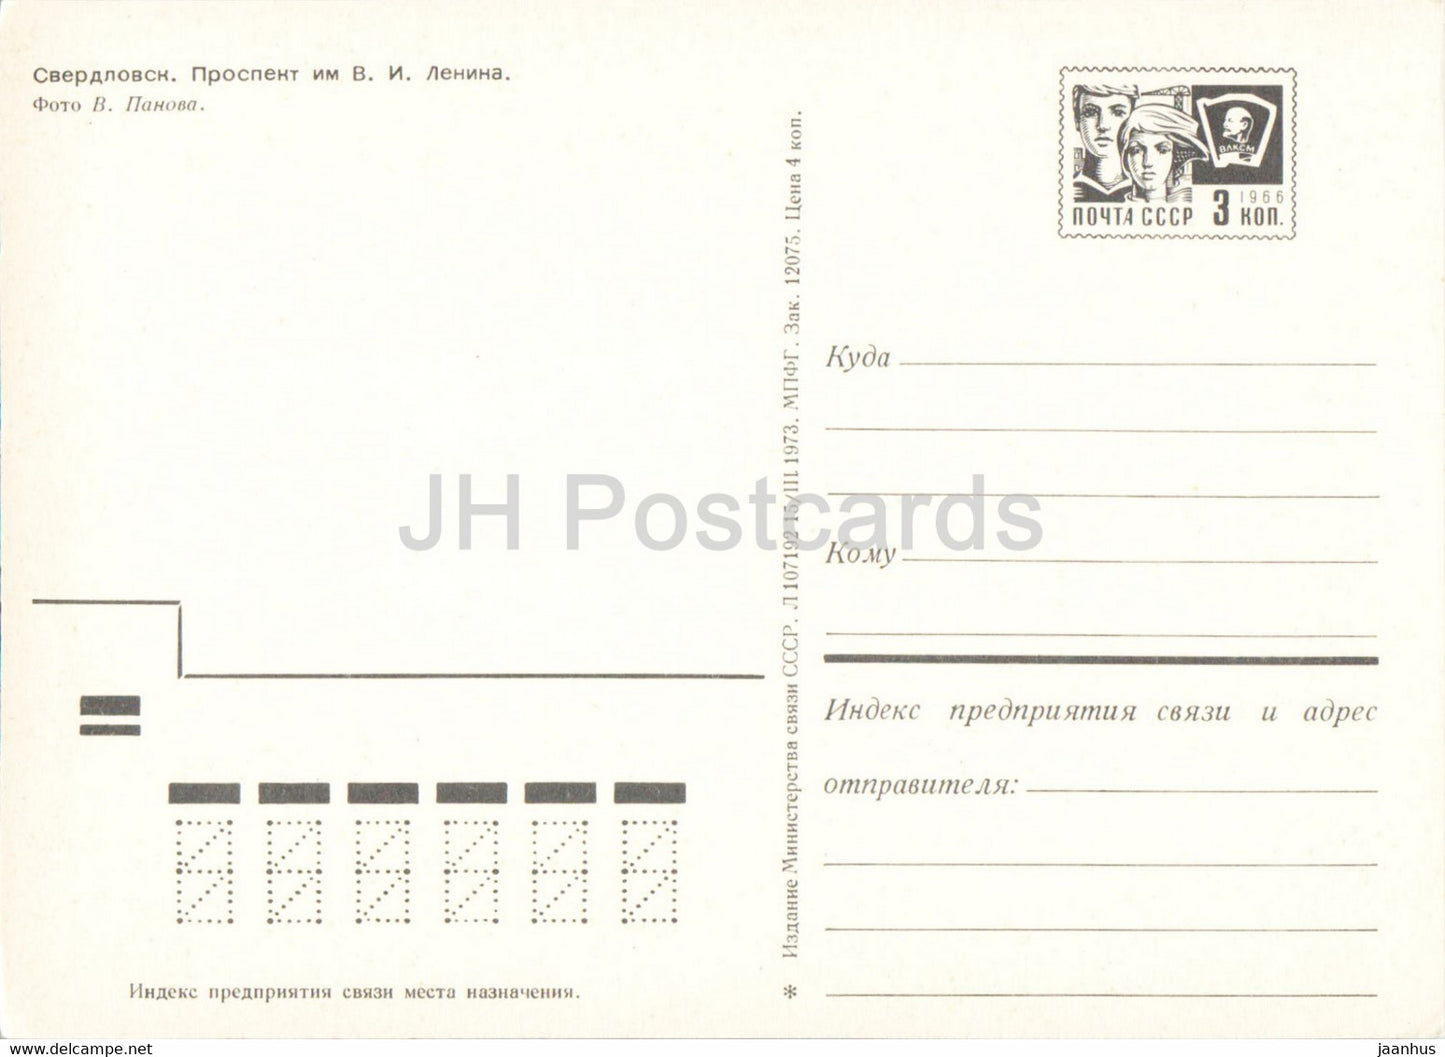 Sverdlovsk - Yekaterinburg - Lenin prospekt - avenue - tram - postal stationery - 1973 - Russia USSR - unused